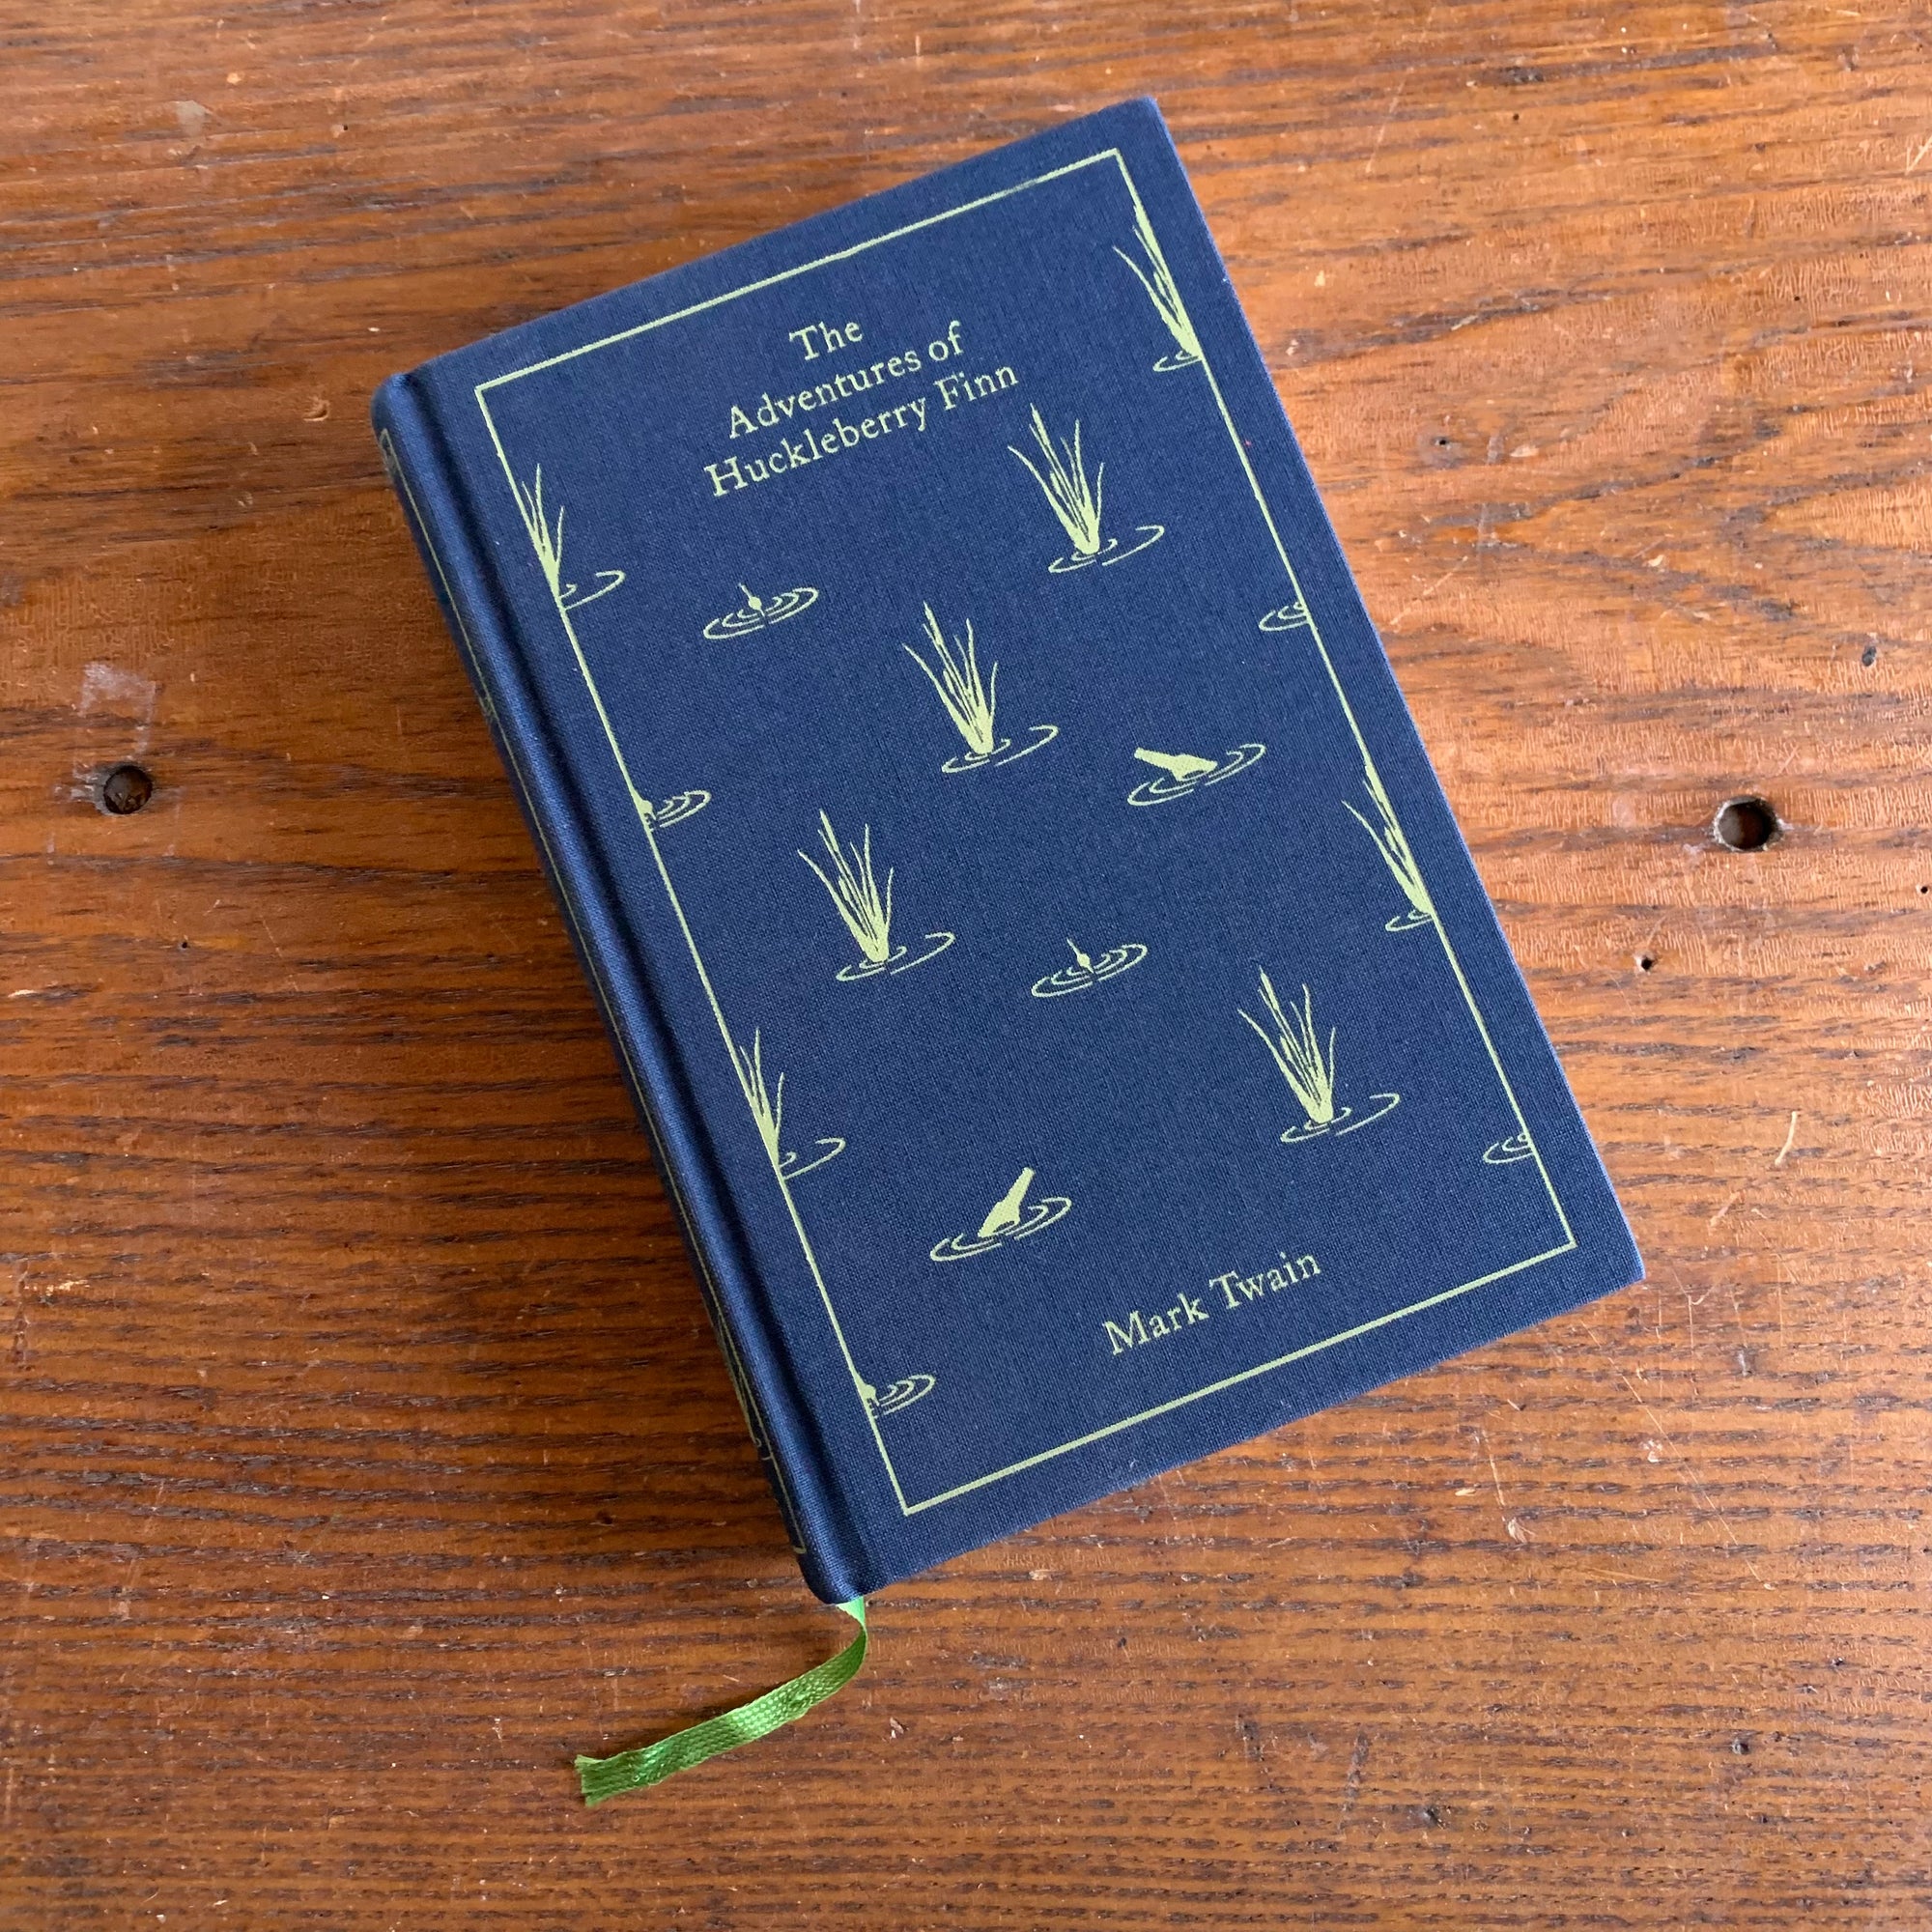 The Adventures of Huckleberry Finn by Mark Twain - 2014 Penguin Classics Clothbound Edition